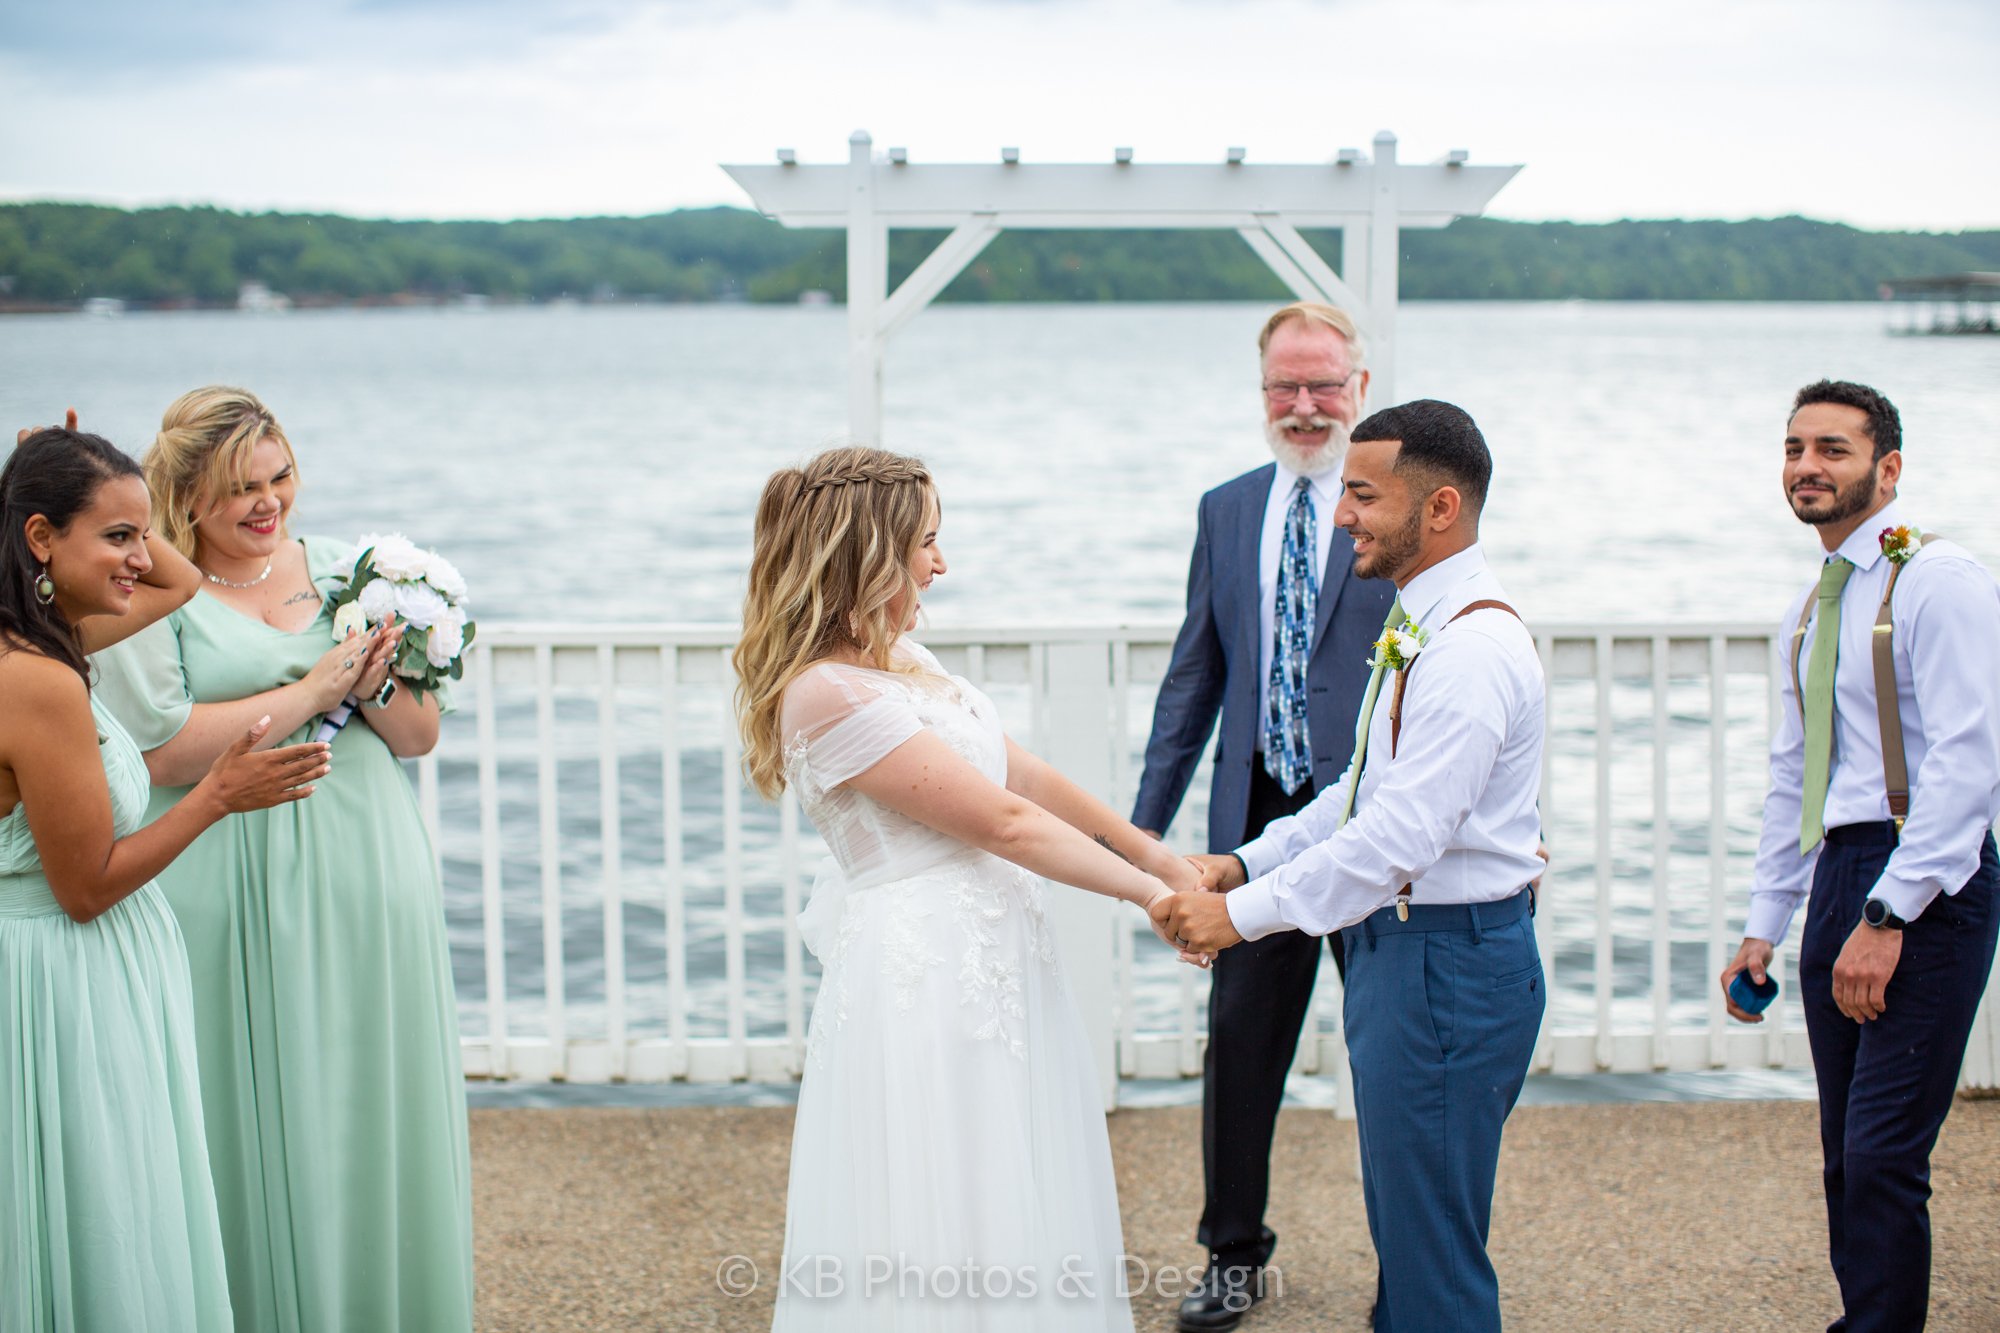 Abbi-Daniel-Wedding-Lake-of-the-Ozarks-Margaritaville-Missouri-Jefferson-City-wedding-photos-KB-Photos-and-Design-555.jpg